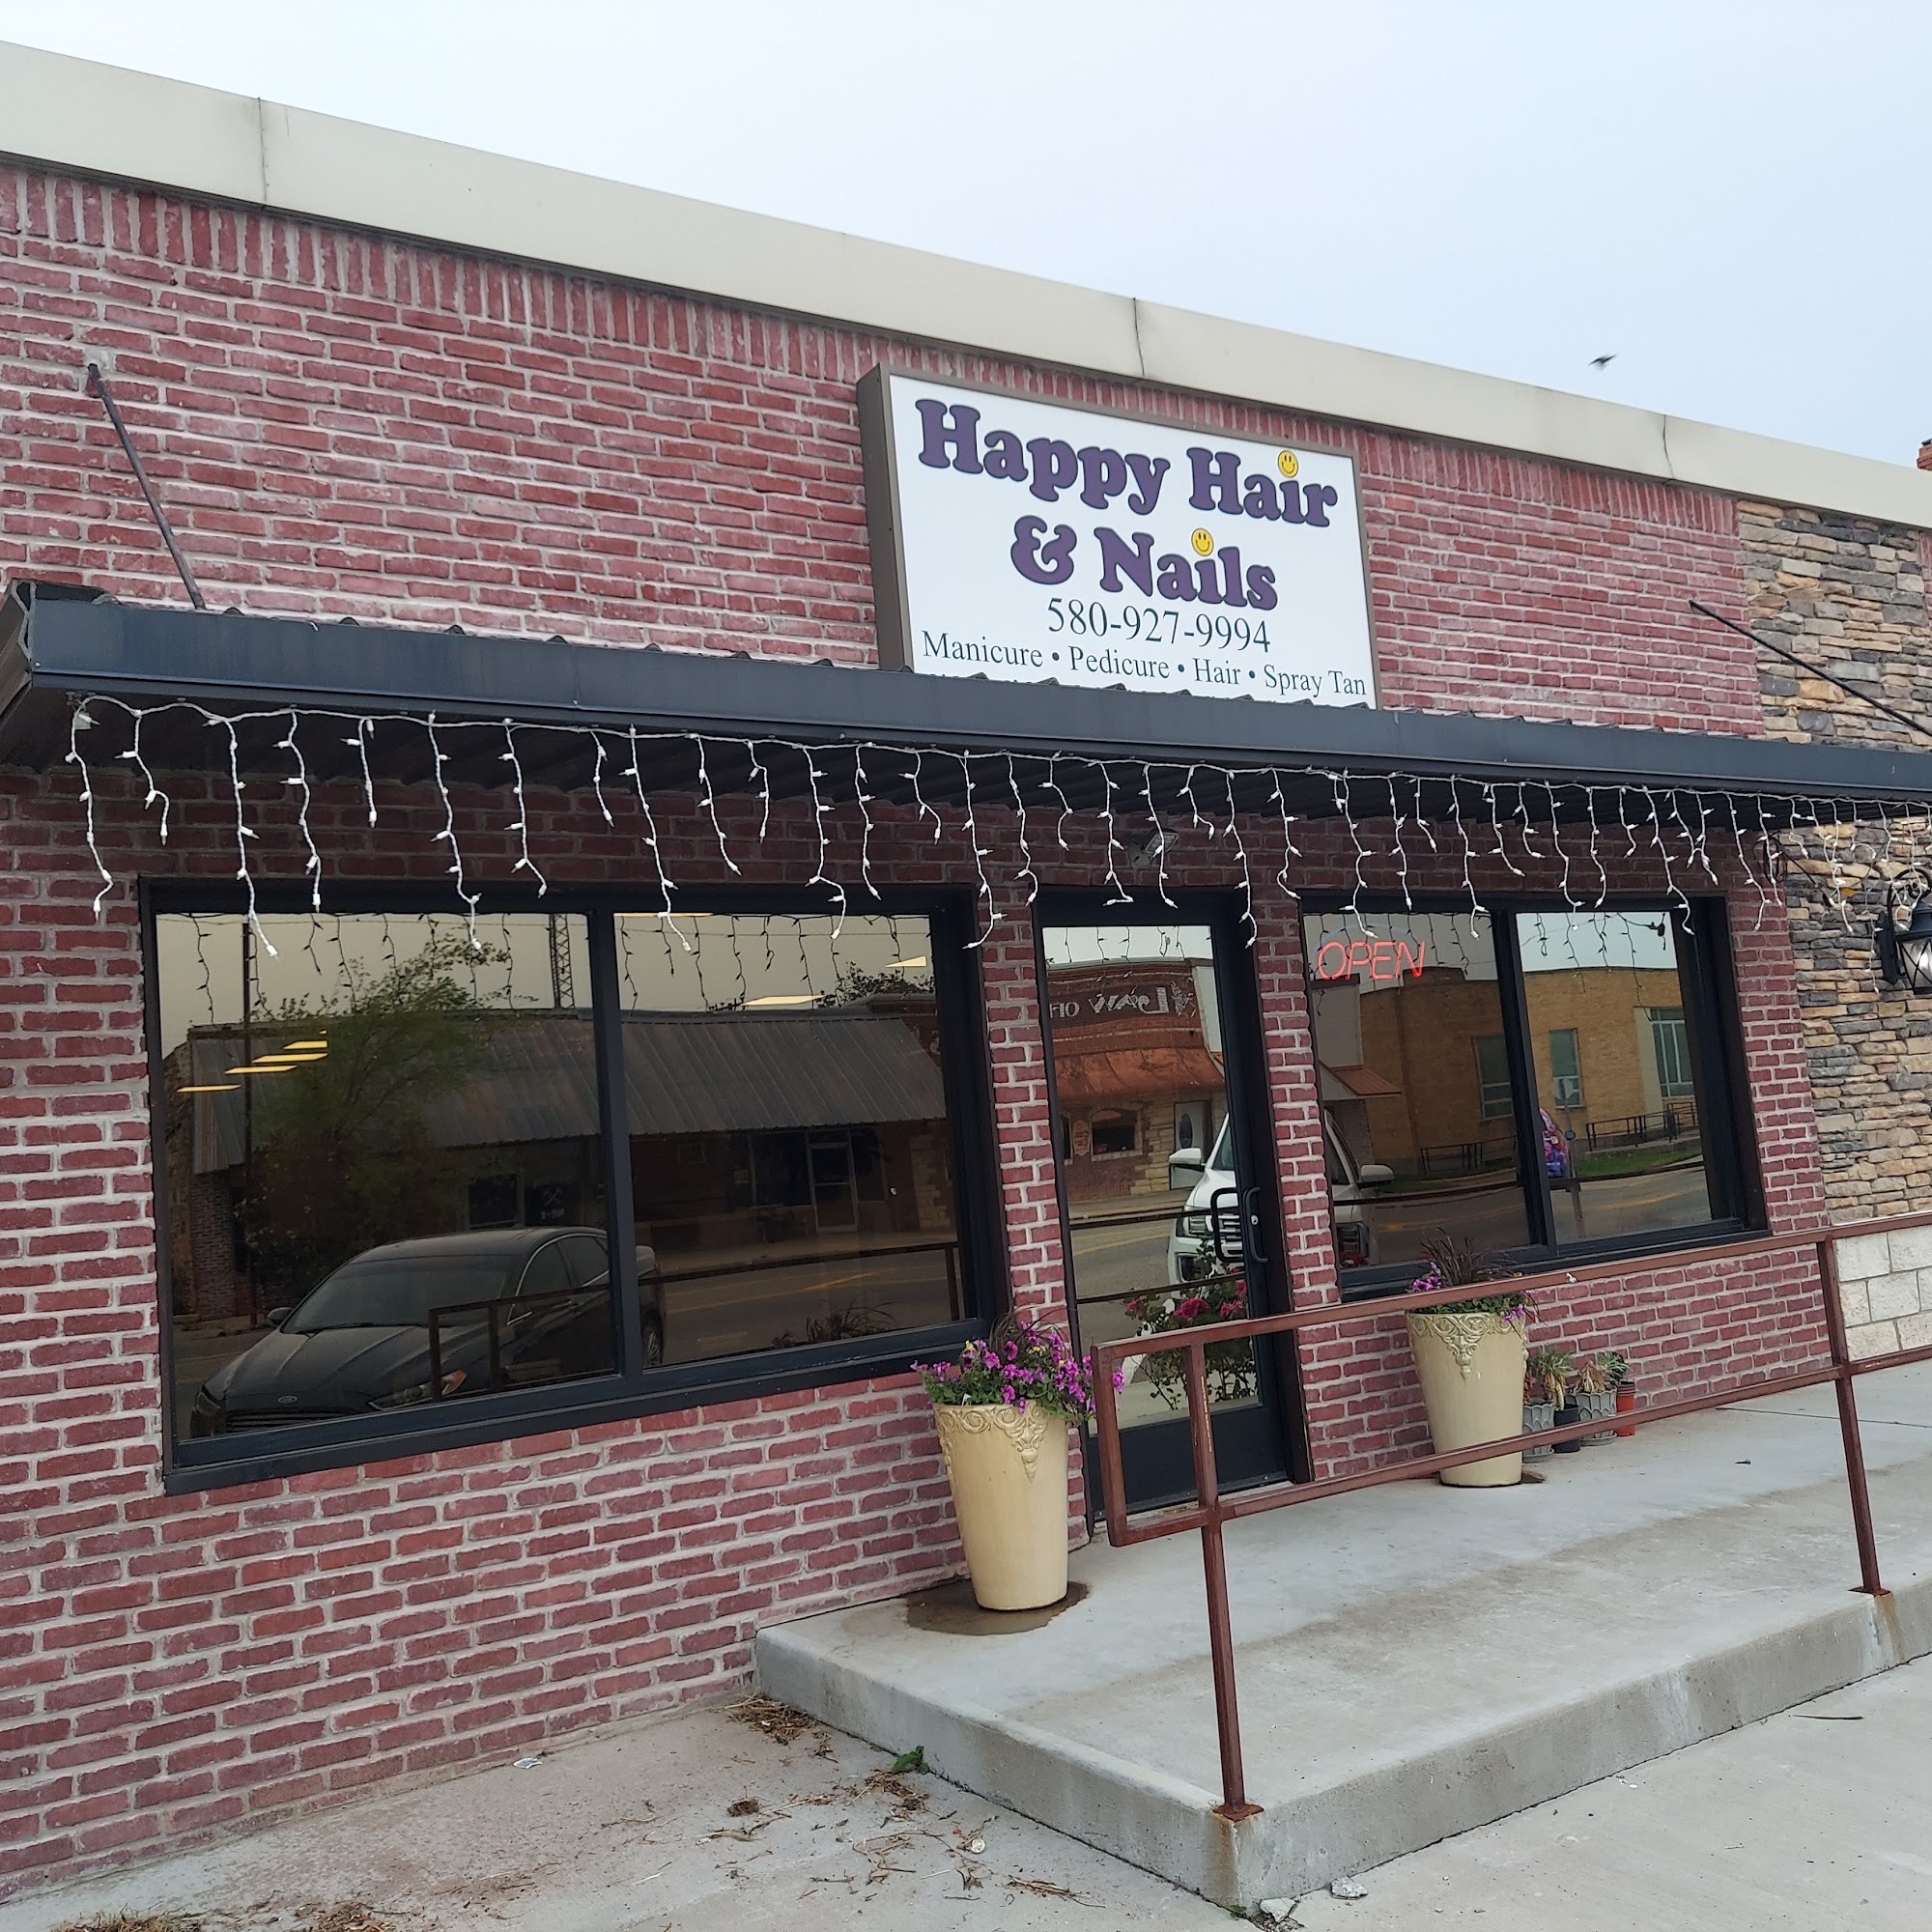 Happy Hair & Nails 21 N Main St, Coalgate Oklahoma 74538